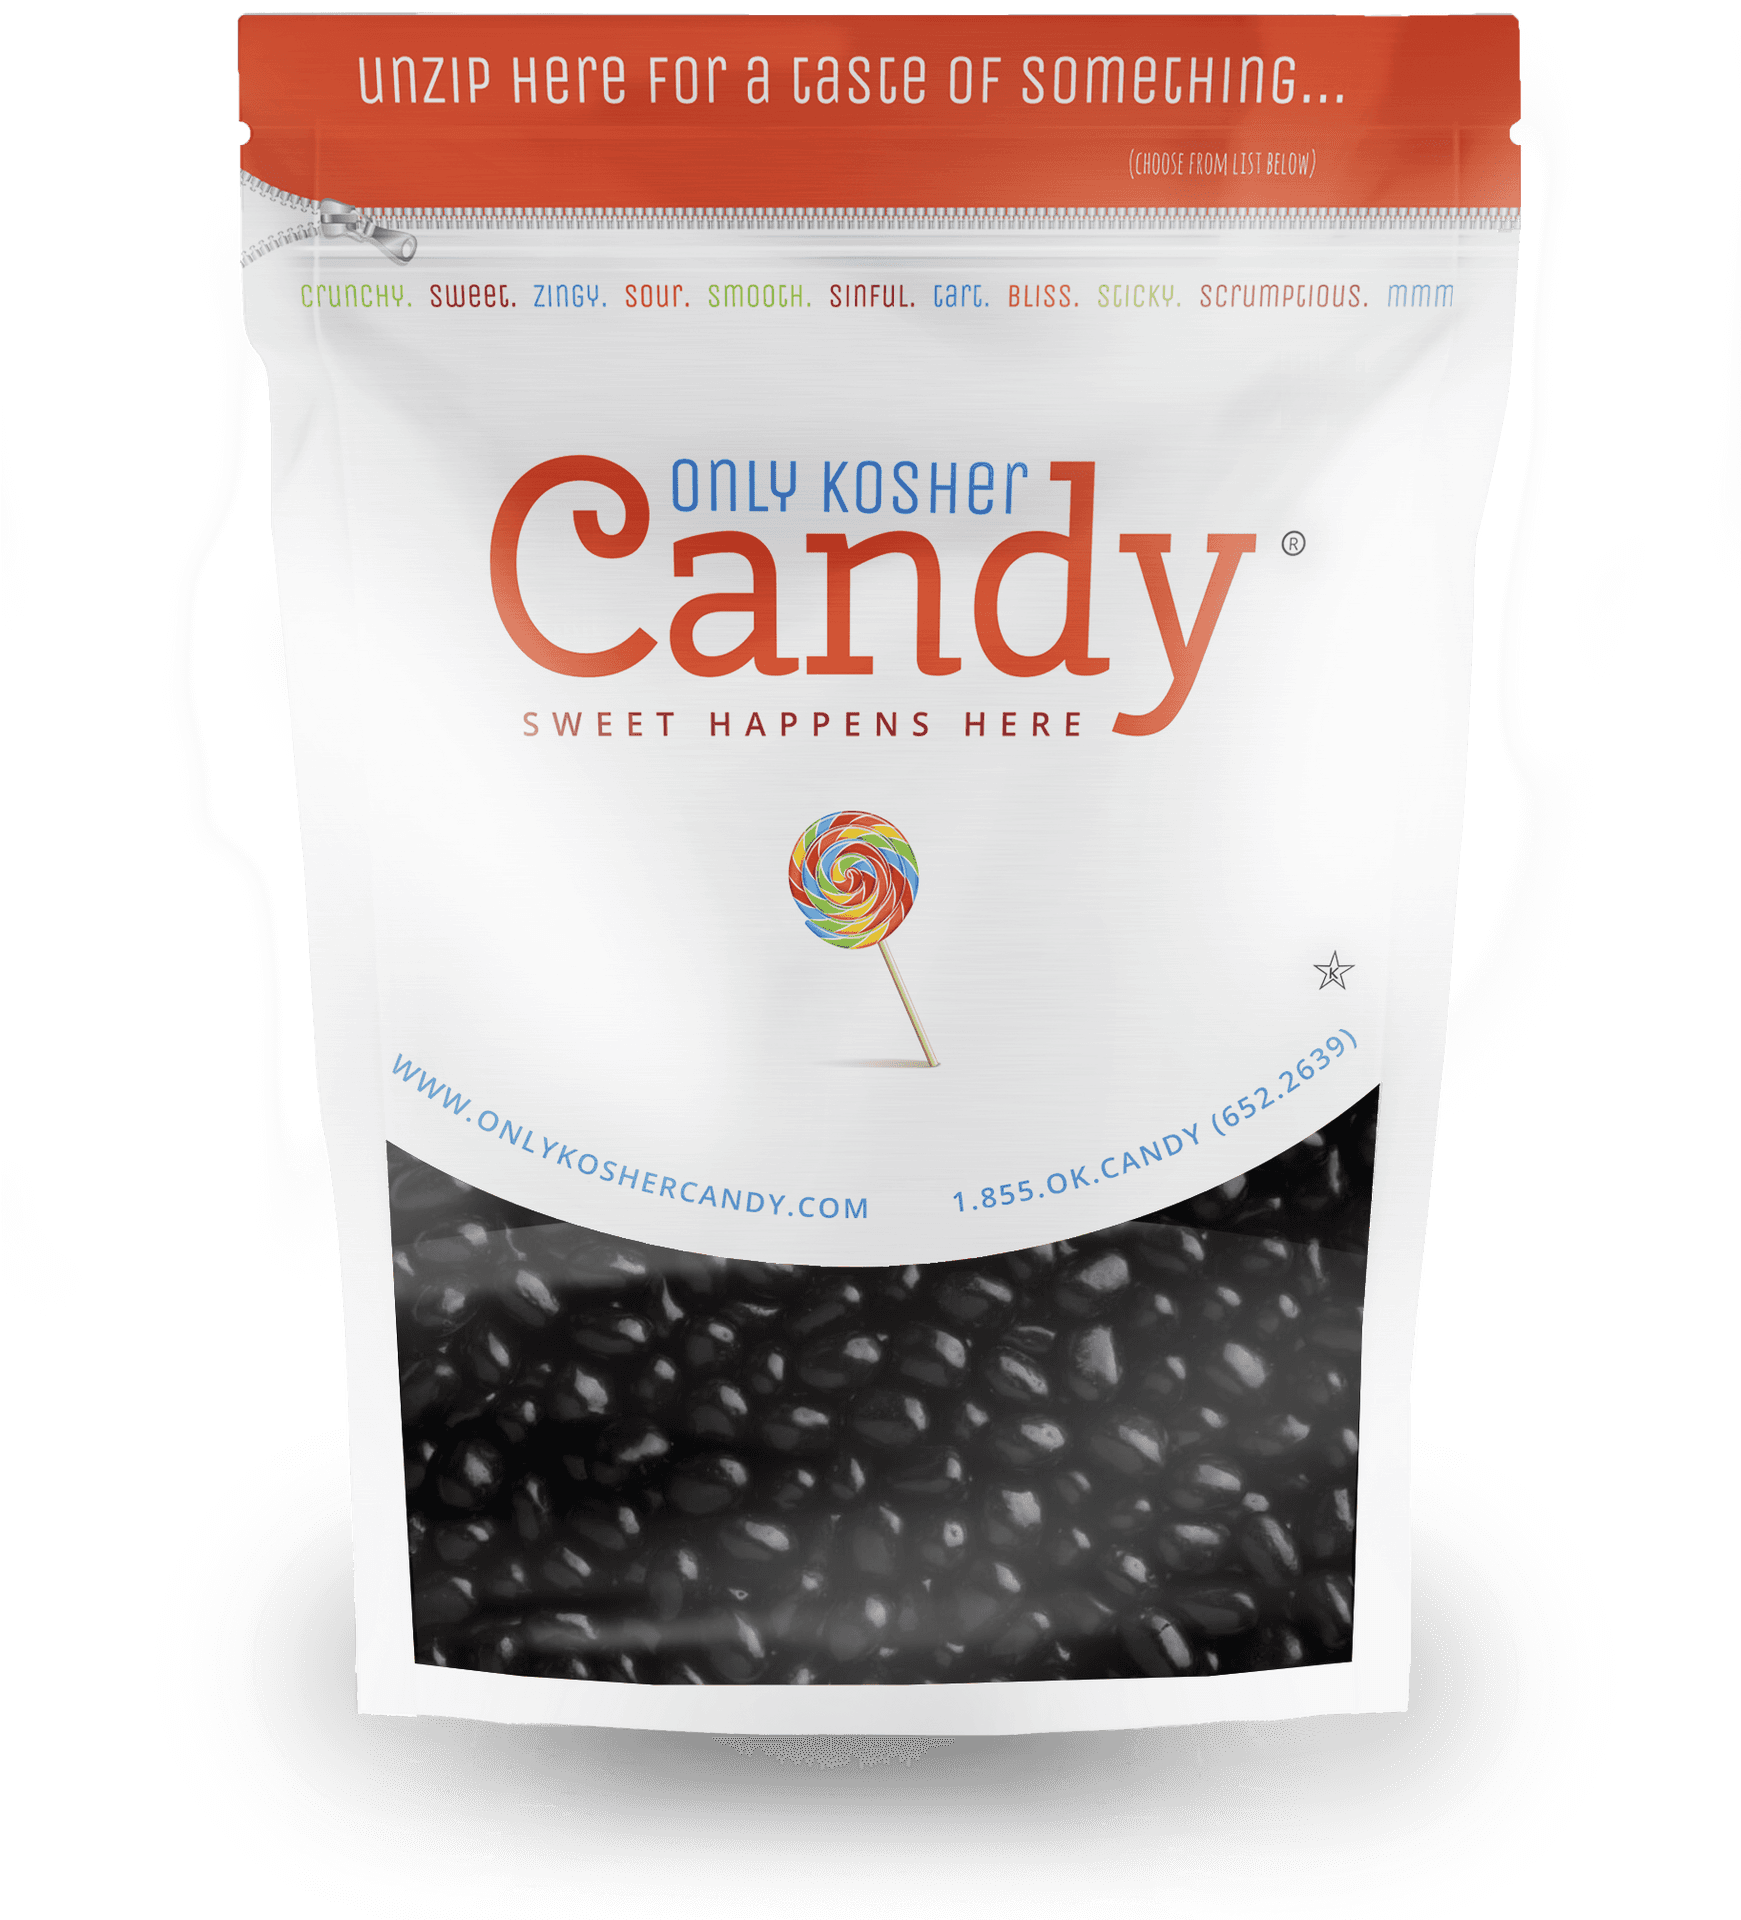 Kosher Candy Packaging Design PNG image